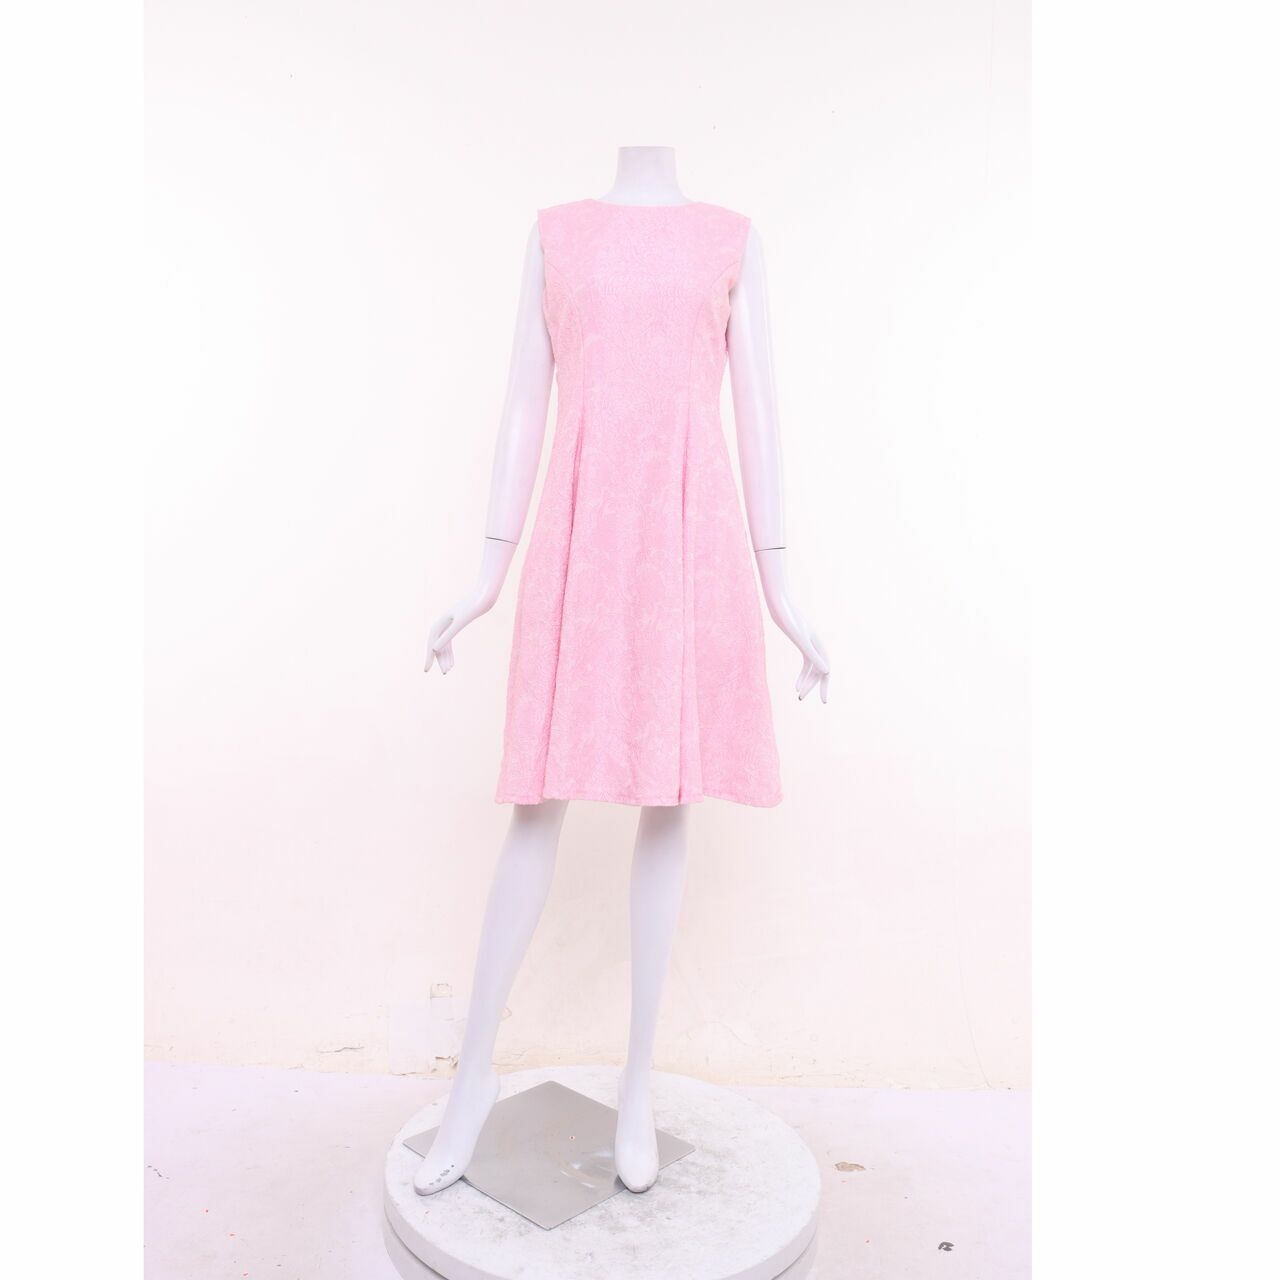 Poise24 Pink Mini Dress